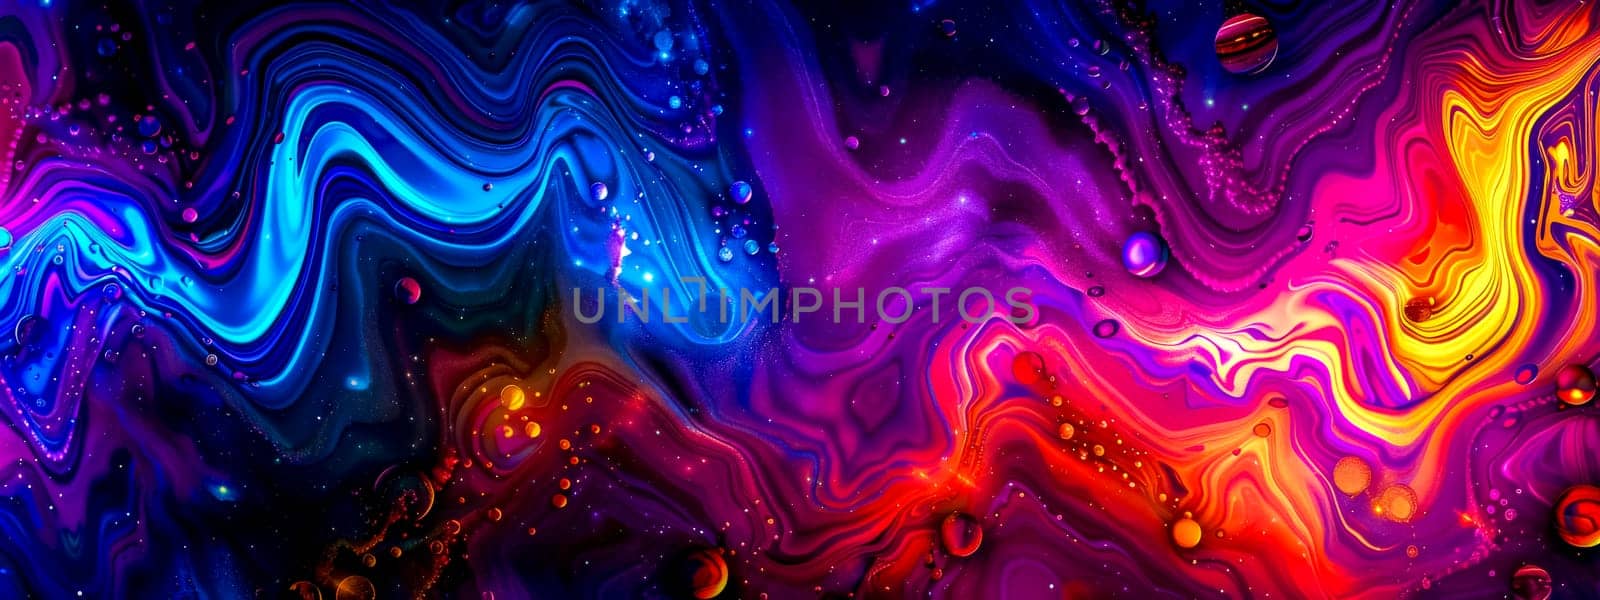 Vibrant psychedelic liquid art background by Edophoto